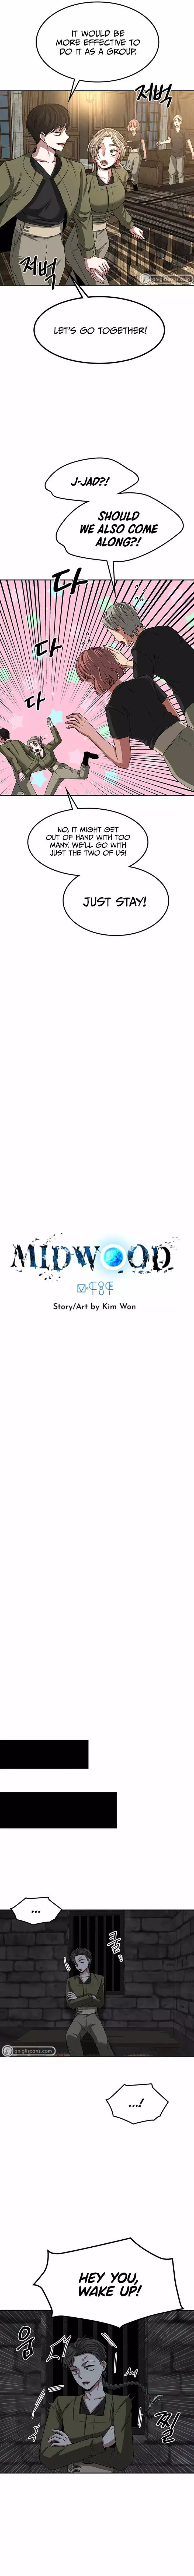 Midwood - 10 page 6-570b6180